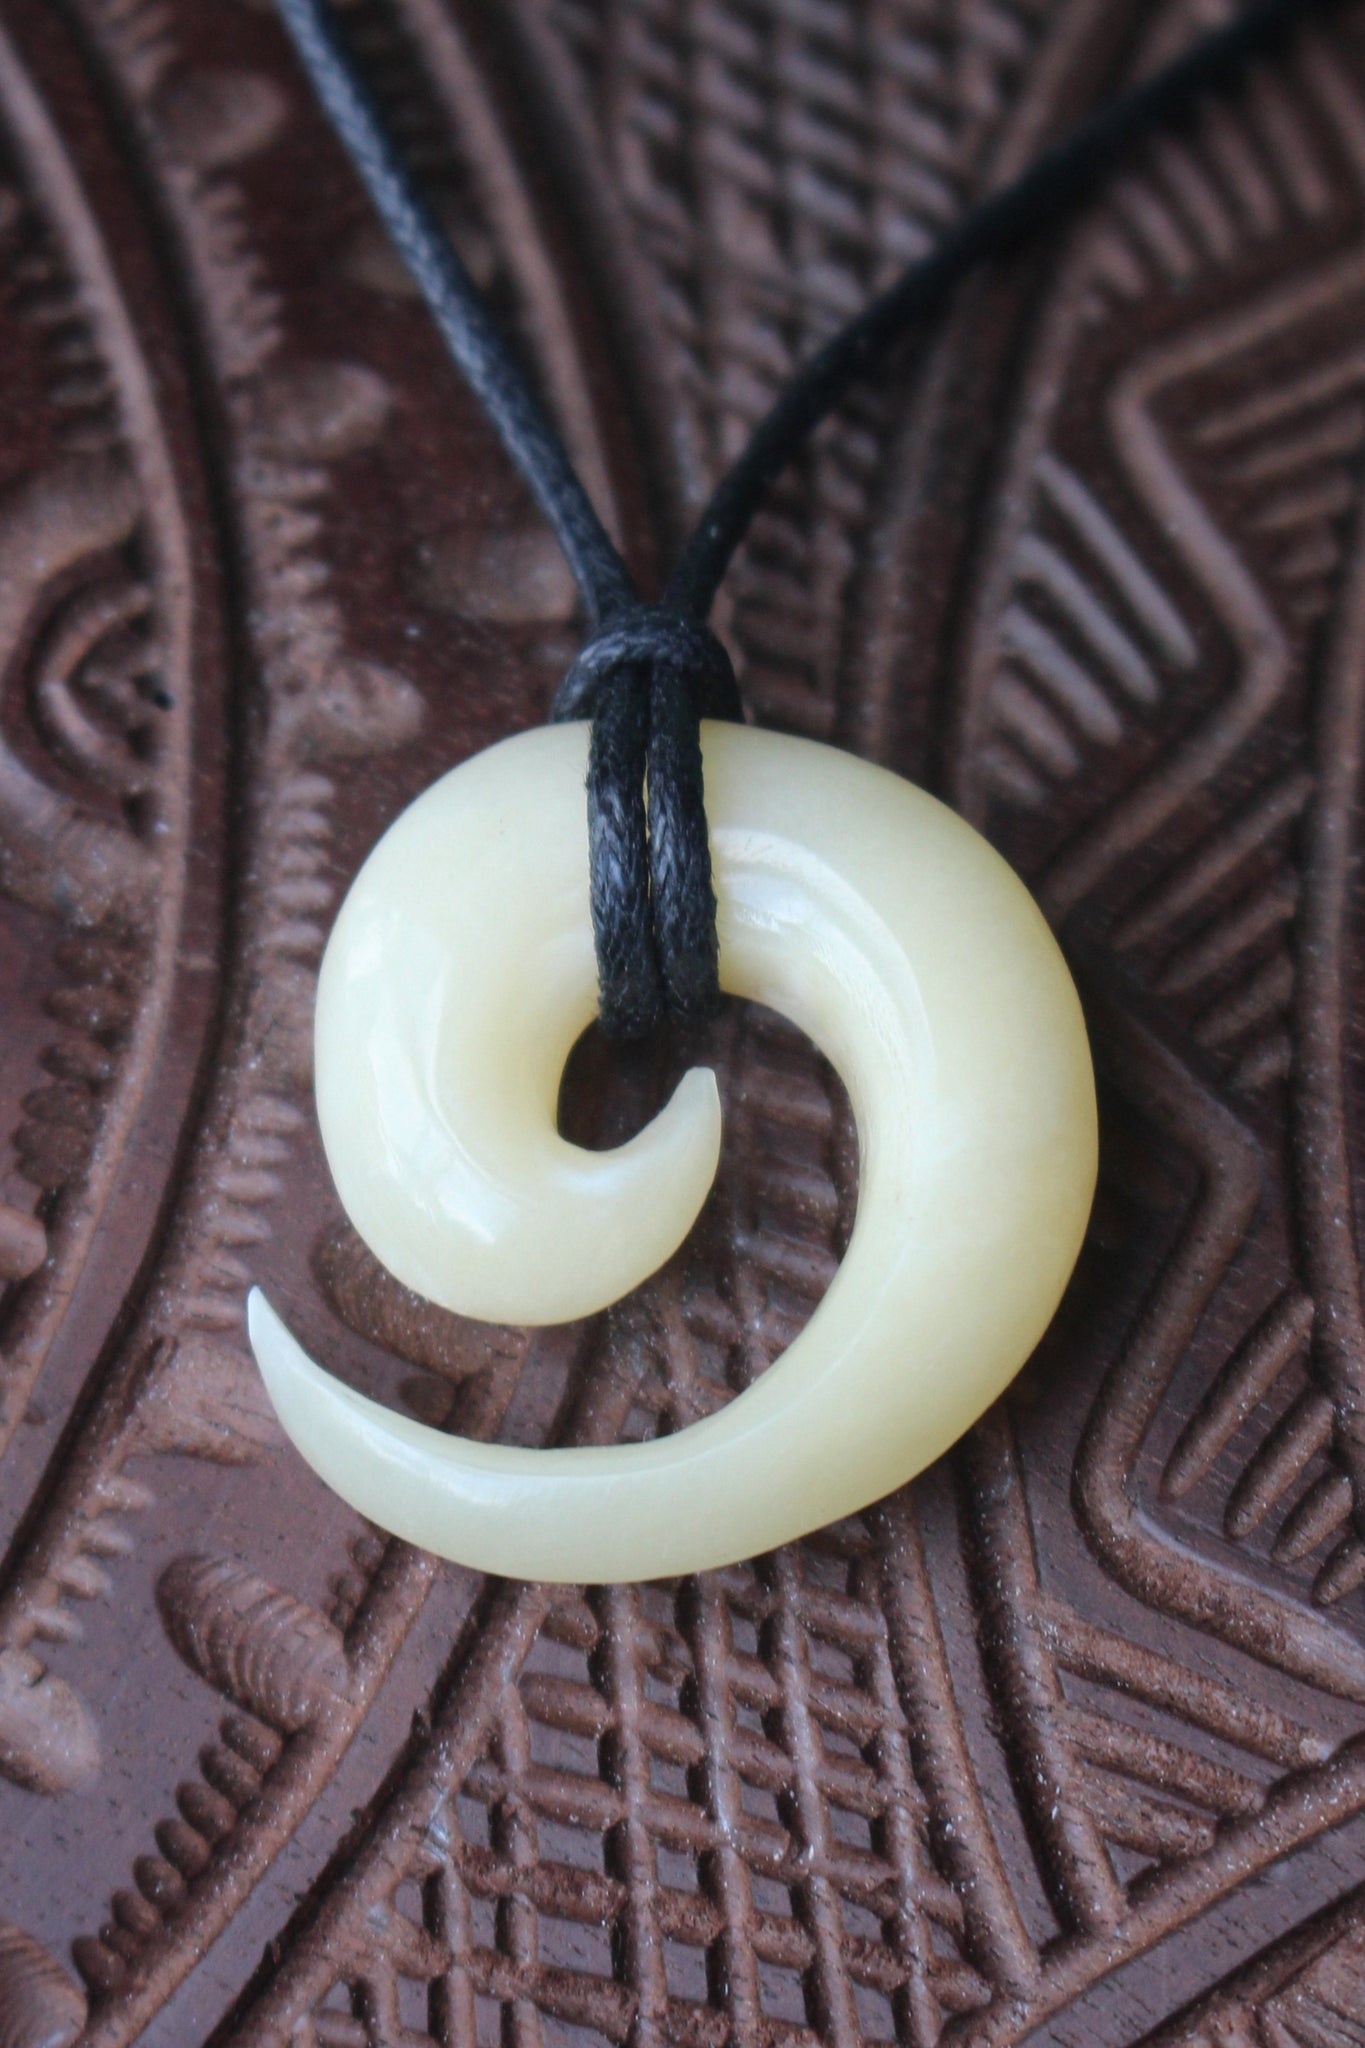 Koata ivi (Spiral made in bone)